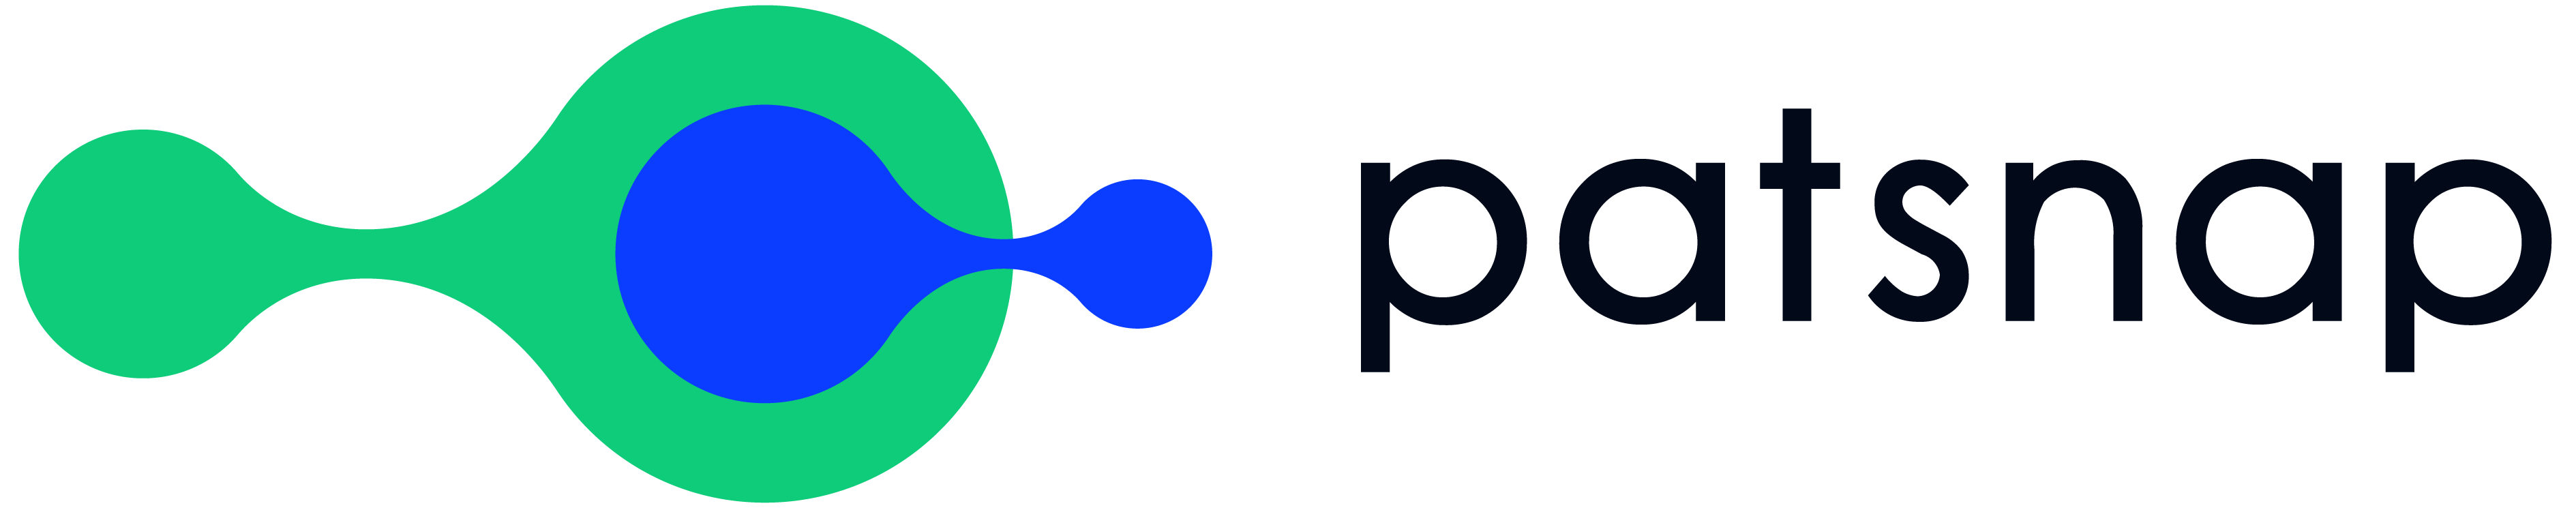 Patsnap Logo